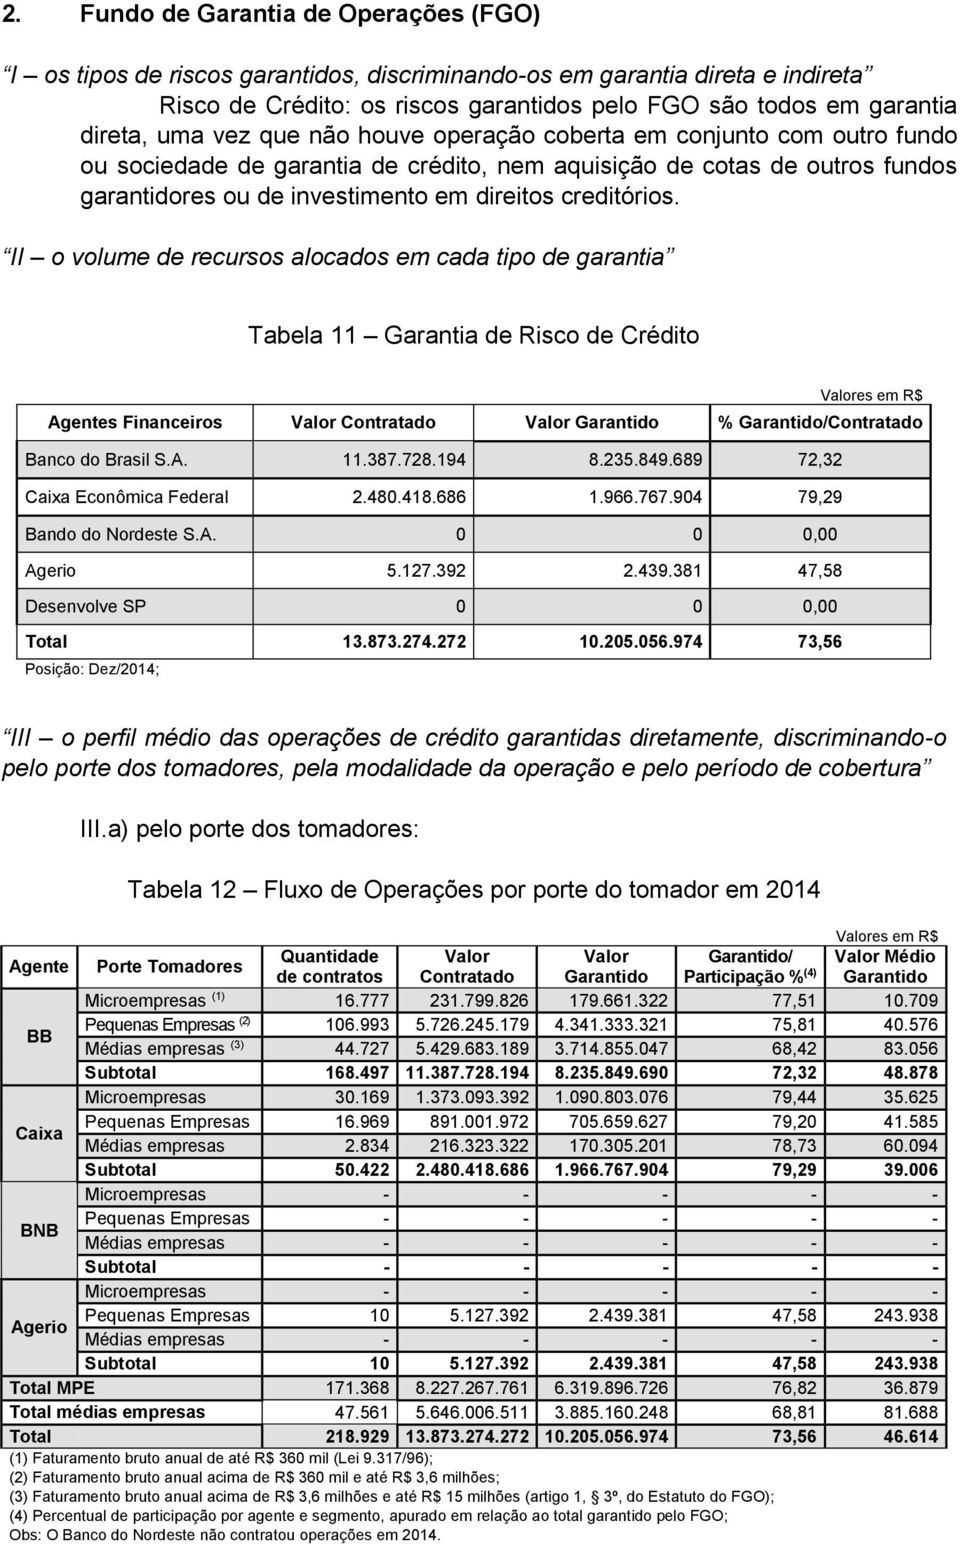 II o volume de recursos alocados em cada tipo de garantia Tabela 11 Garantia de Risco de Crédito Agentes Financeiros Valor Contratado Valor /Contratado Banco do Brasil S.A. 11.387.728.194 8.235.849.